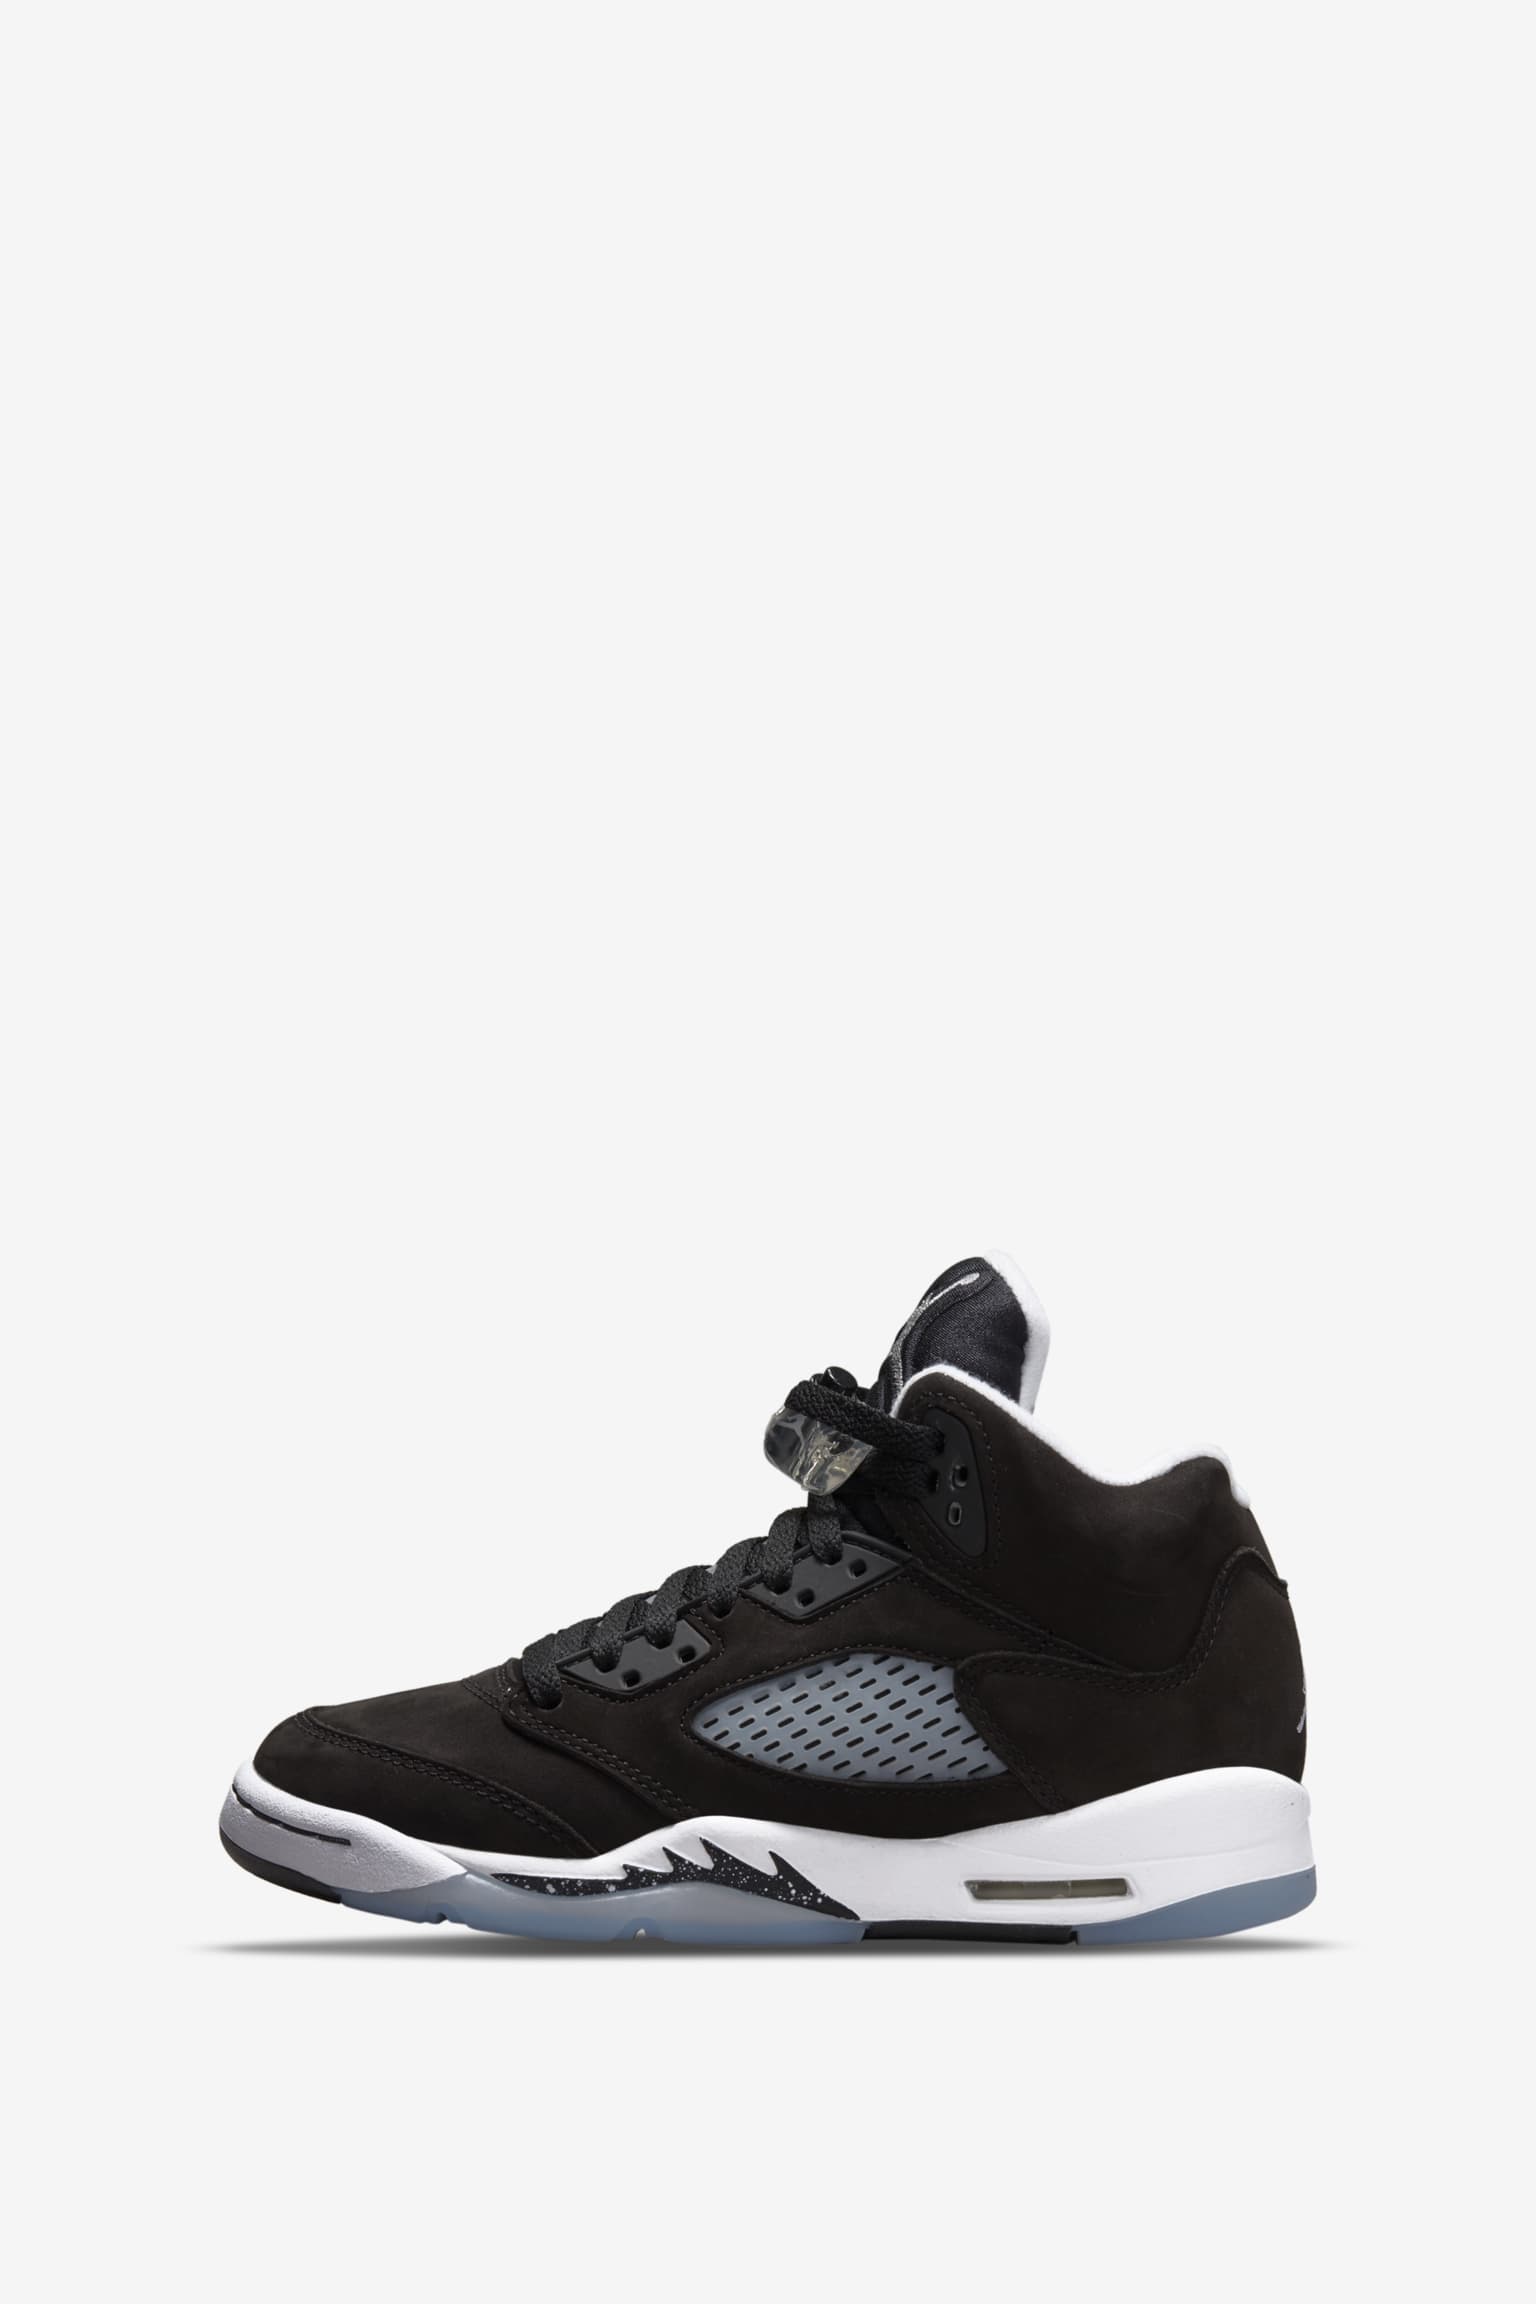 Air Jordan 5 'Moonlight' 發售日期. Nike SNKRS TW